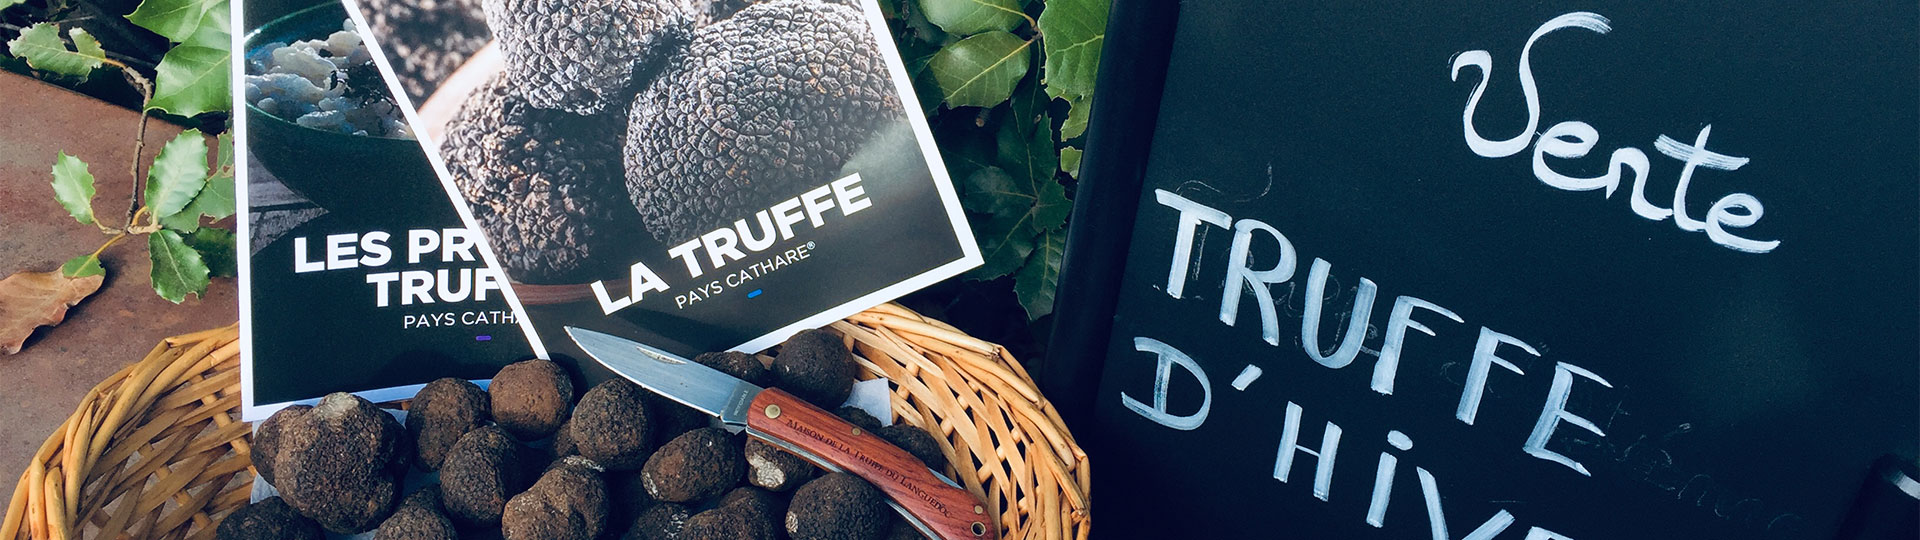 The truffle museum shop